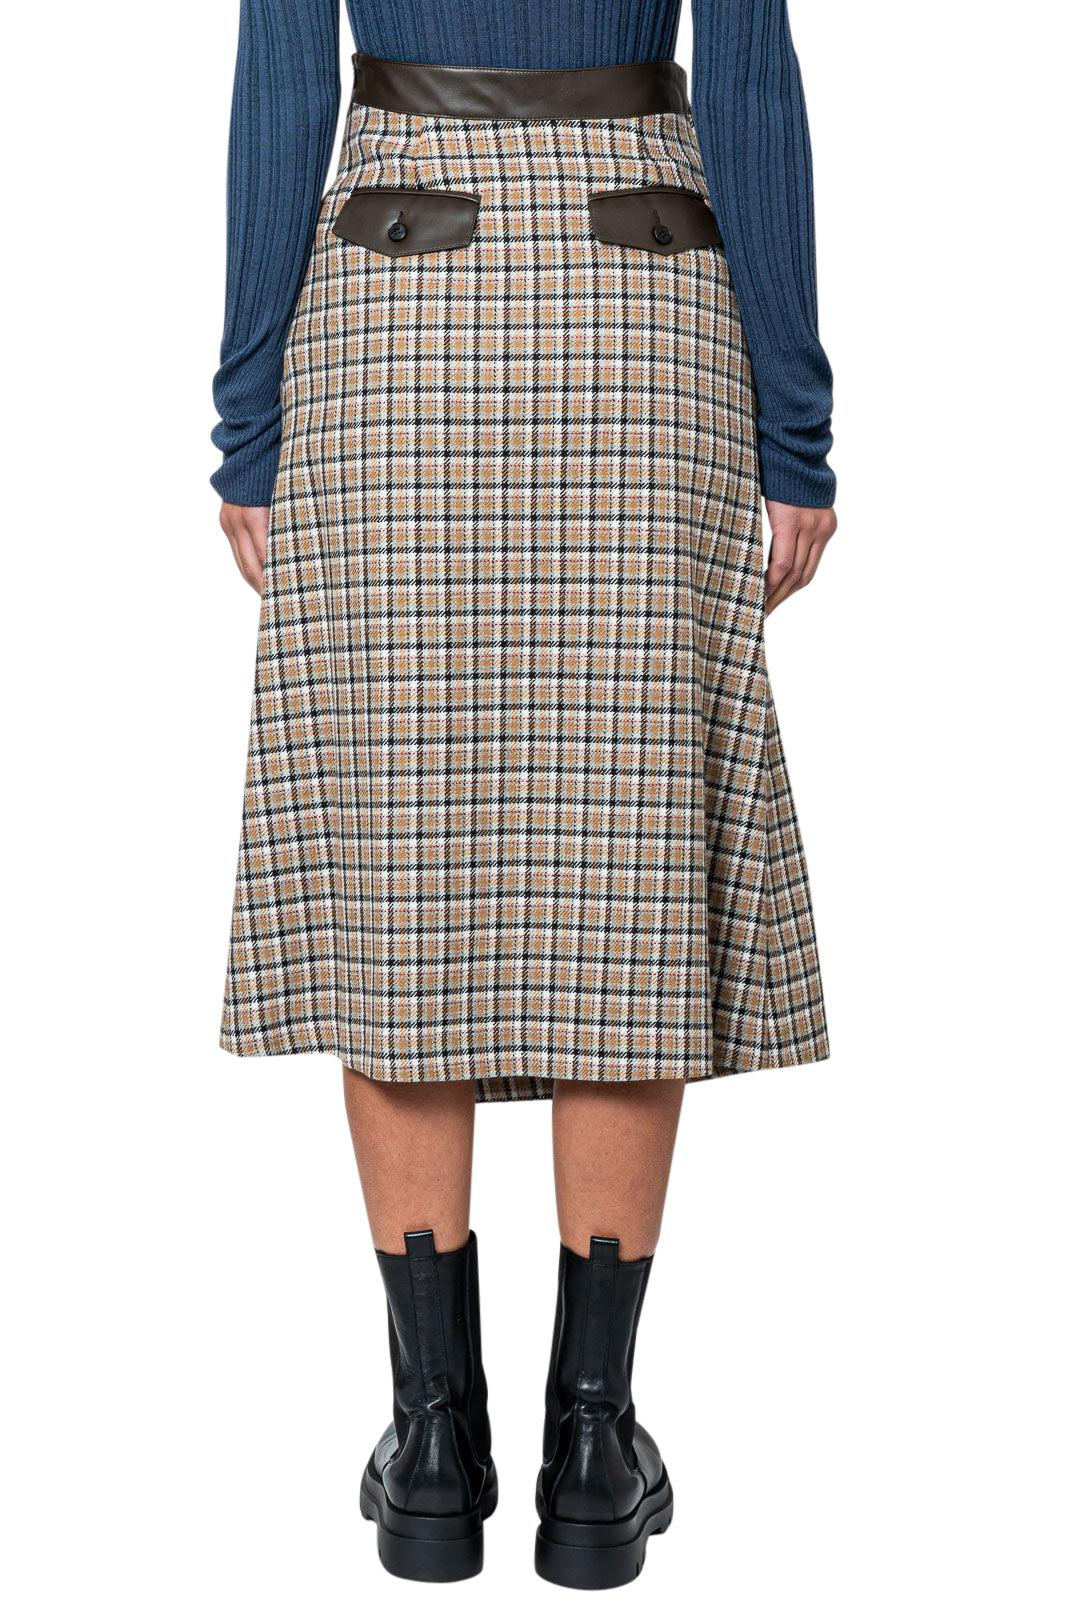 Lvir-Check long skirt-LV21F-SK15-dgallerystore